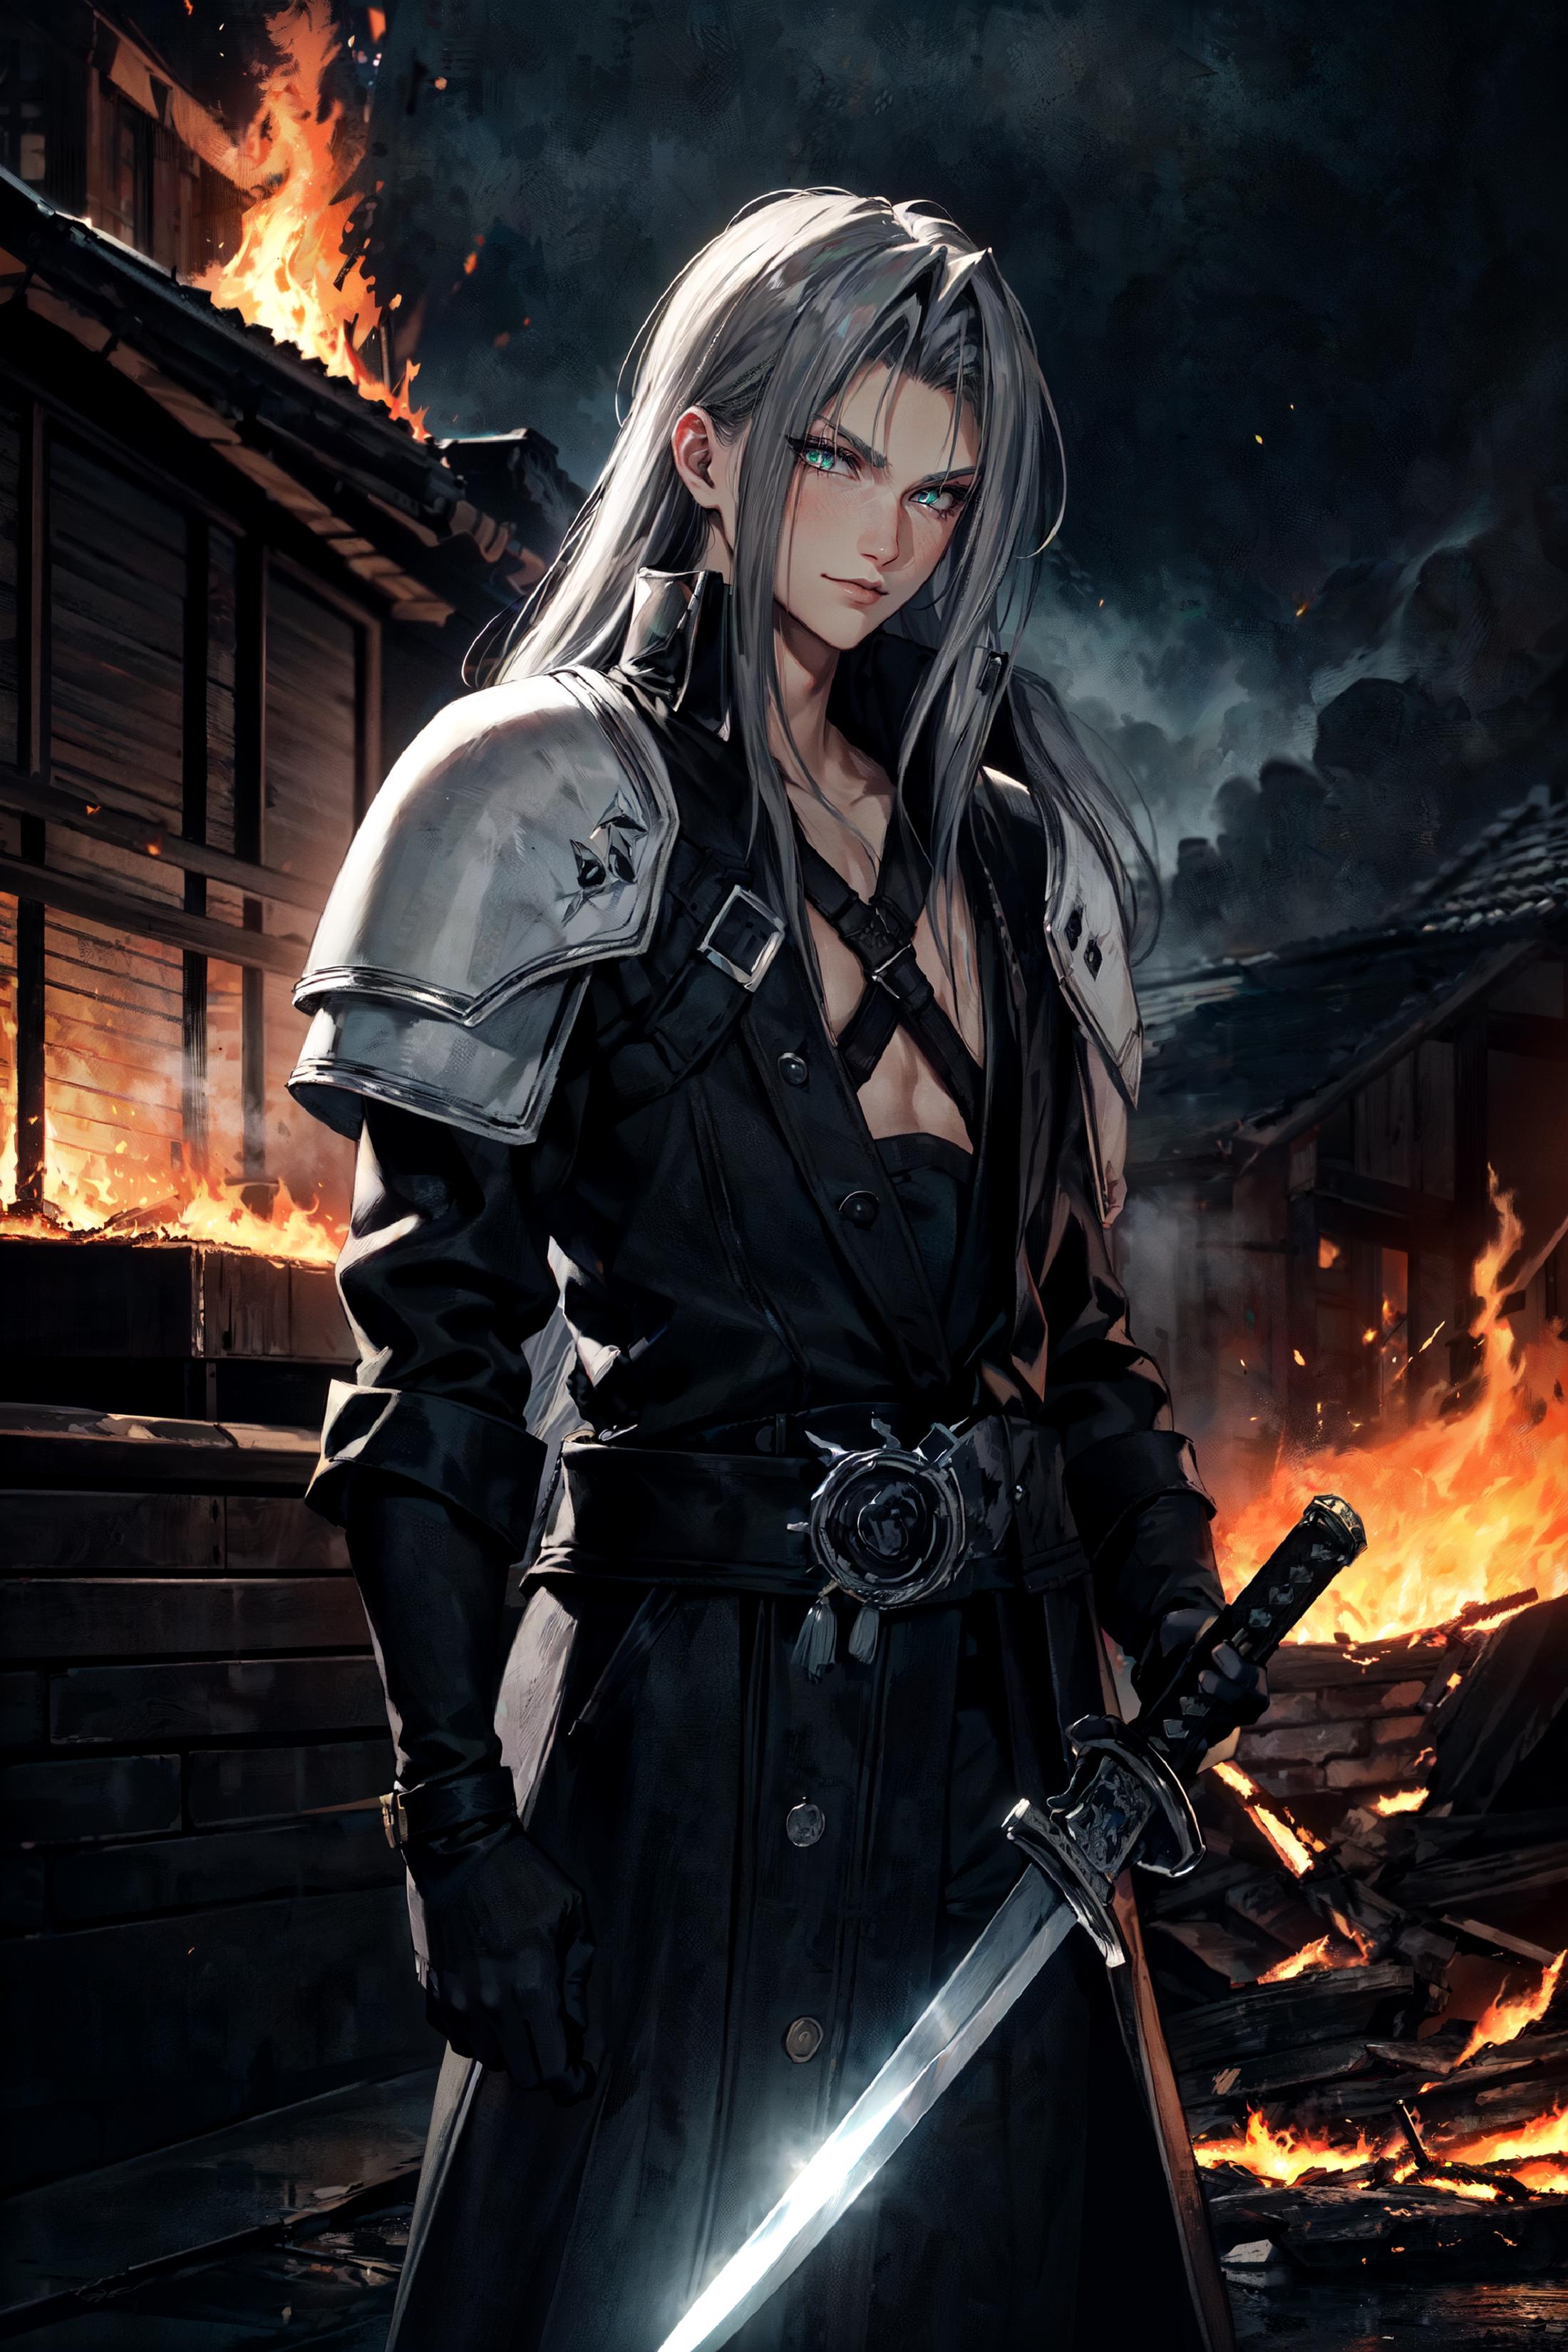 Character - Sephiroth - Final Fantasy VII Remake image by 0_vortex